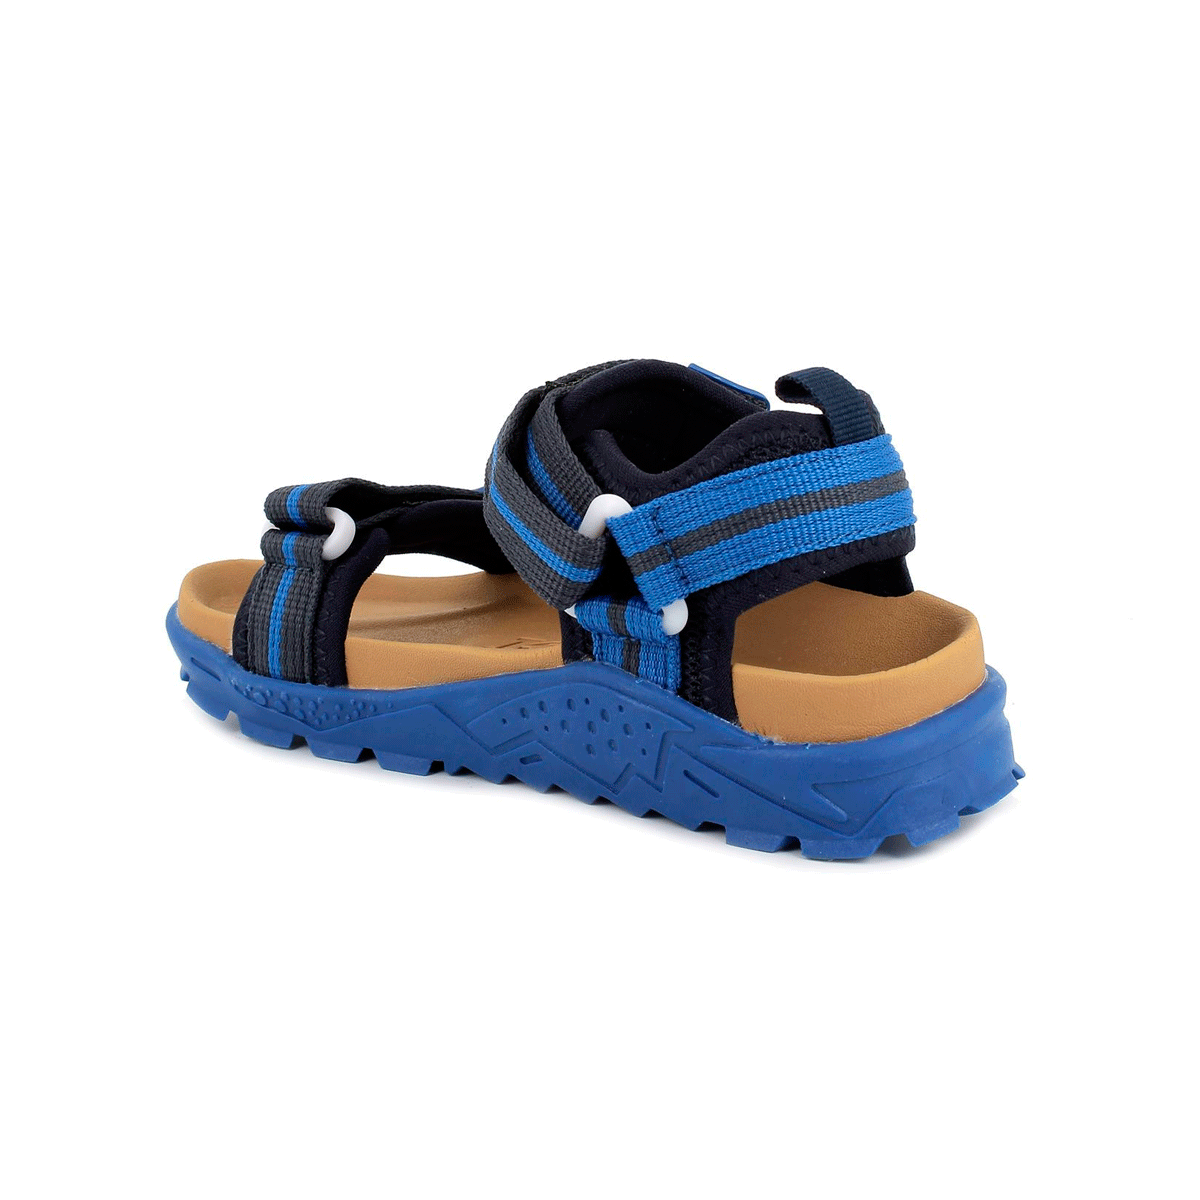 Sandalias cerradas de niño azules Primigi.